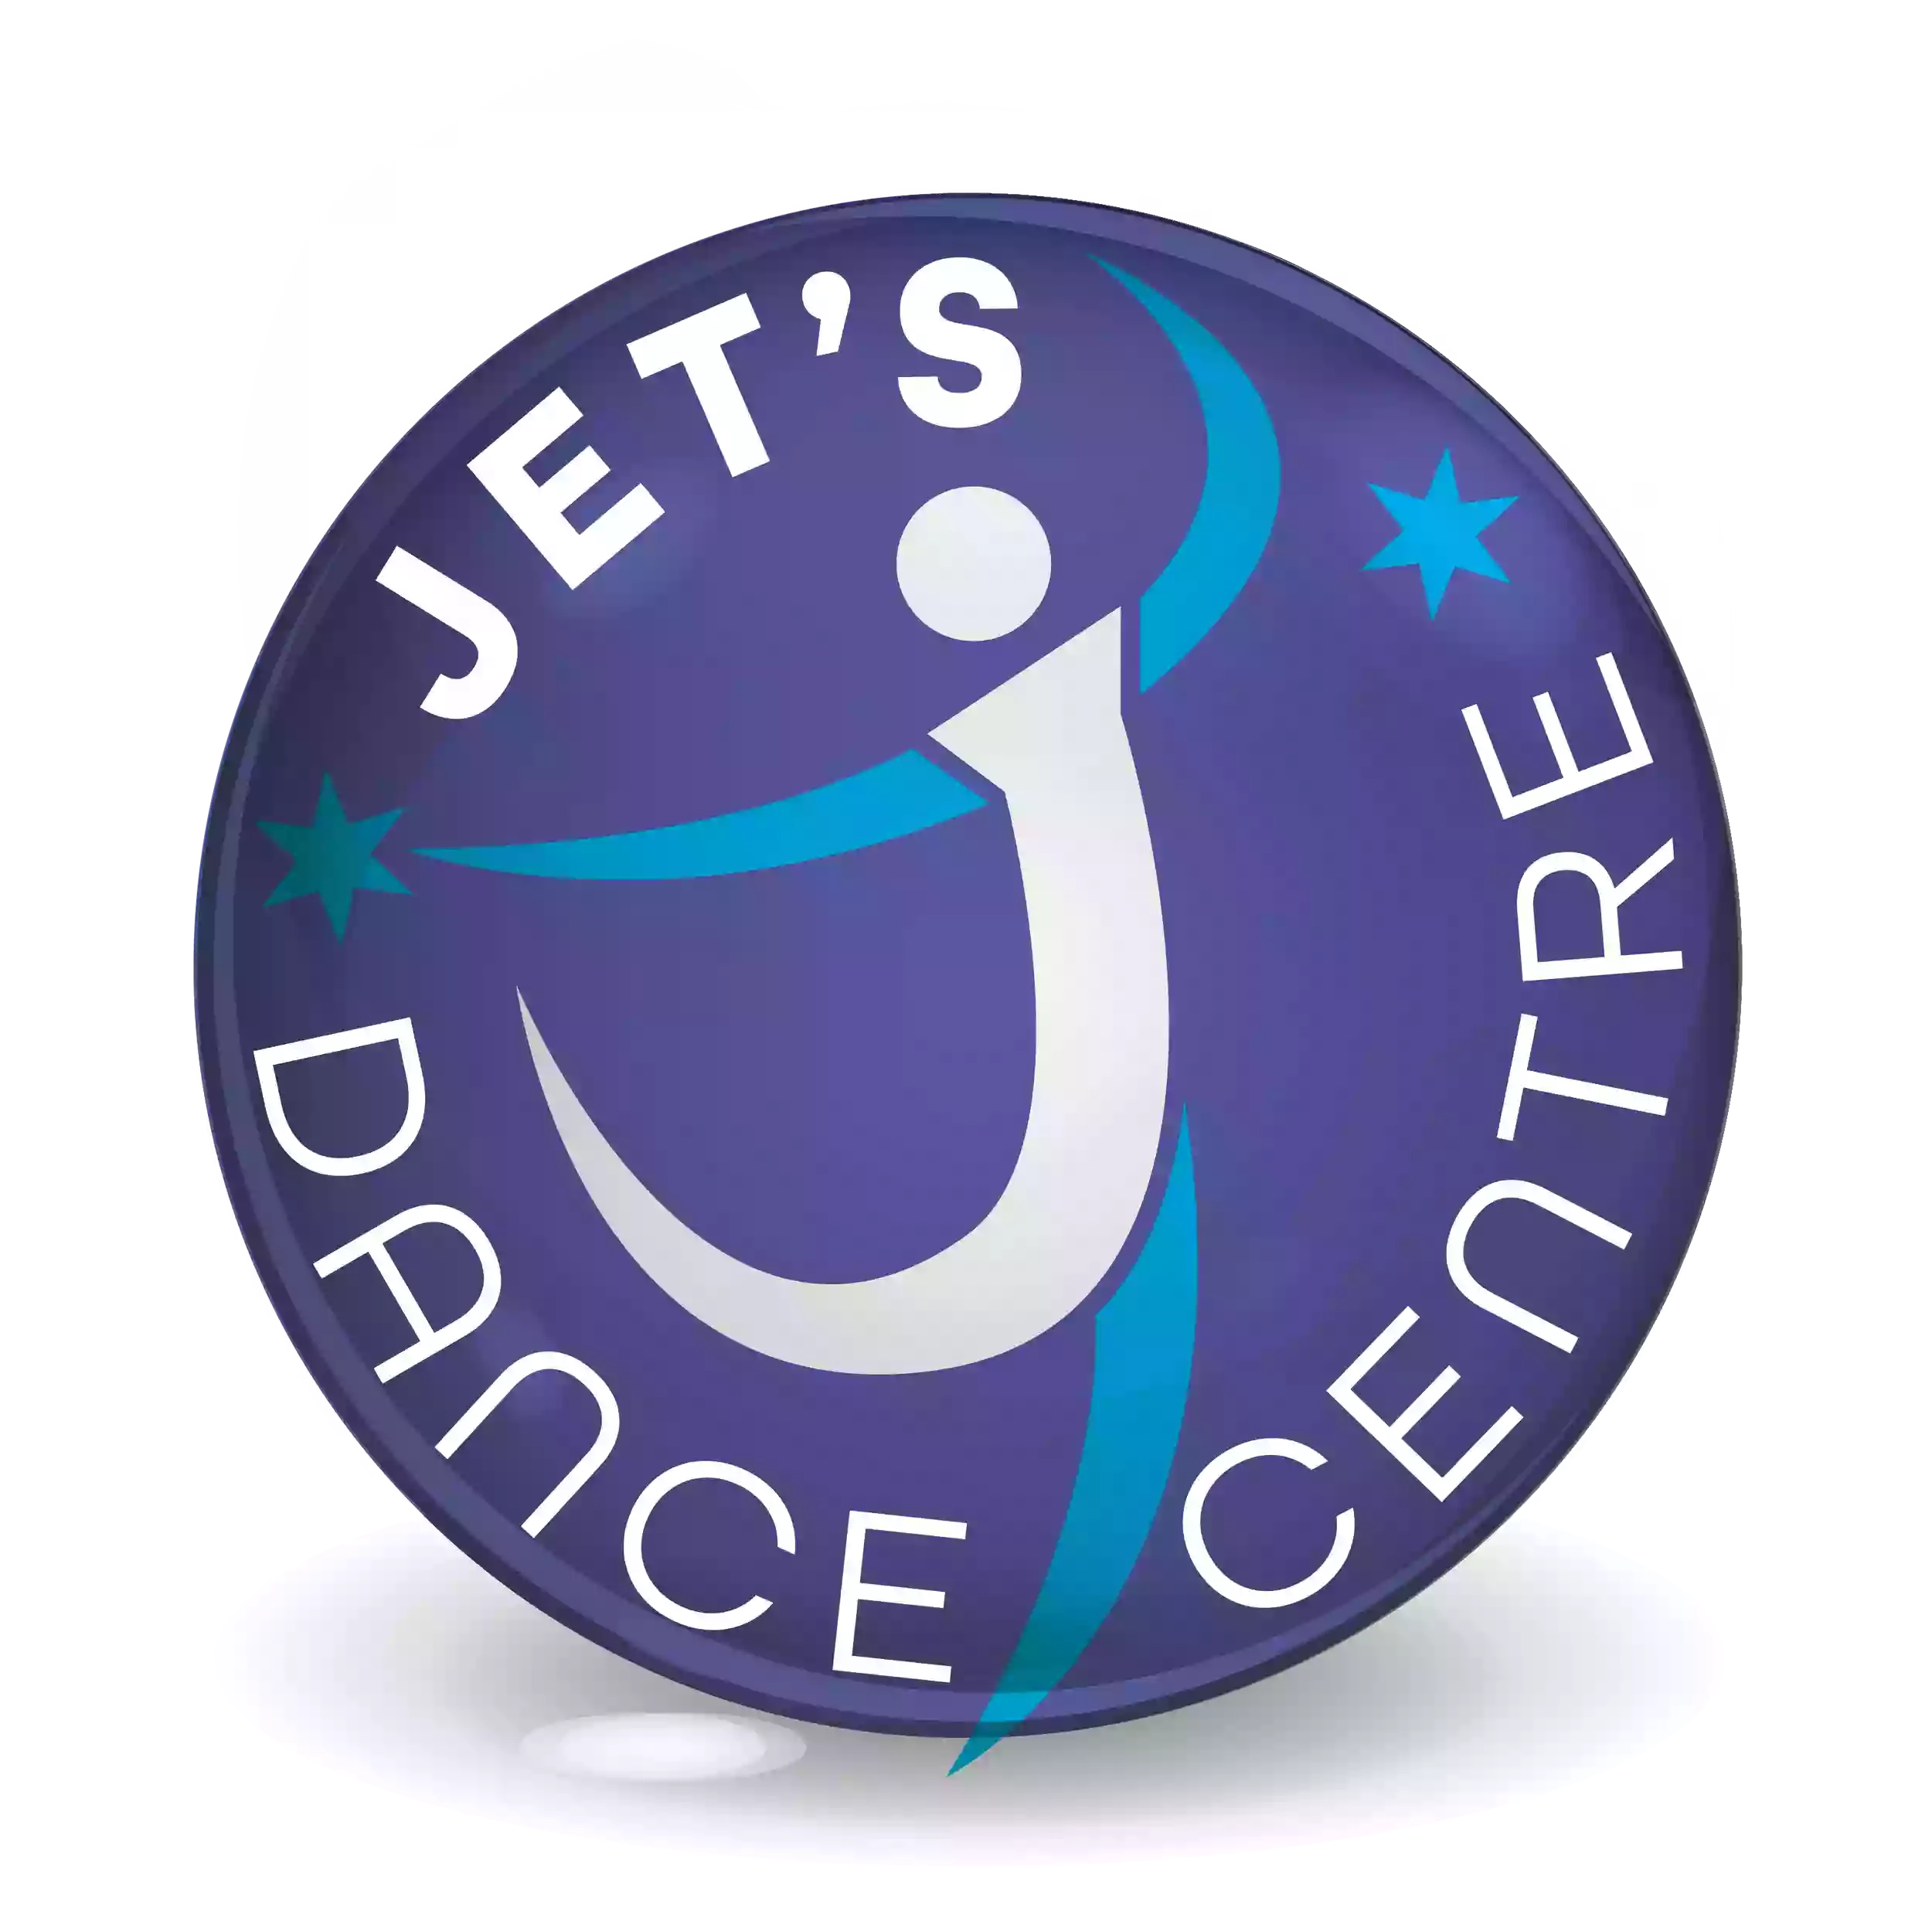 Jets Dance Centre